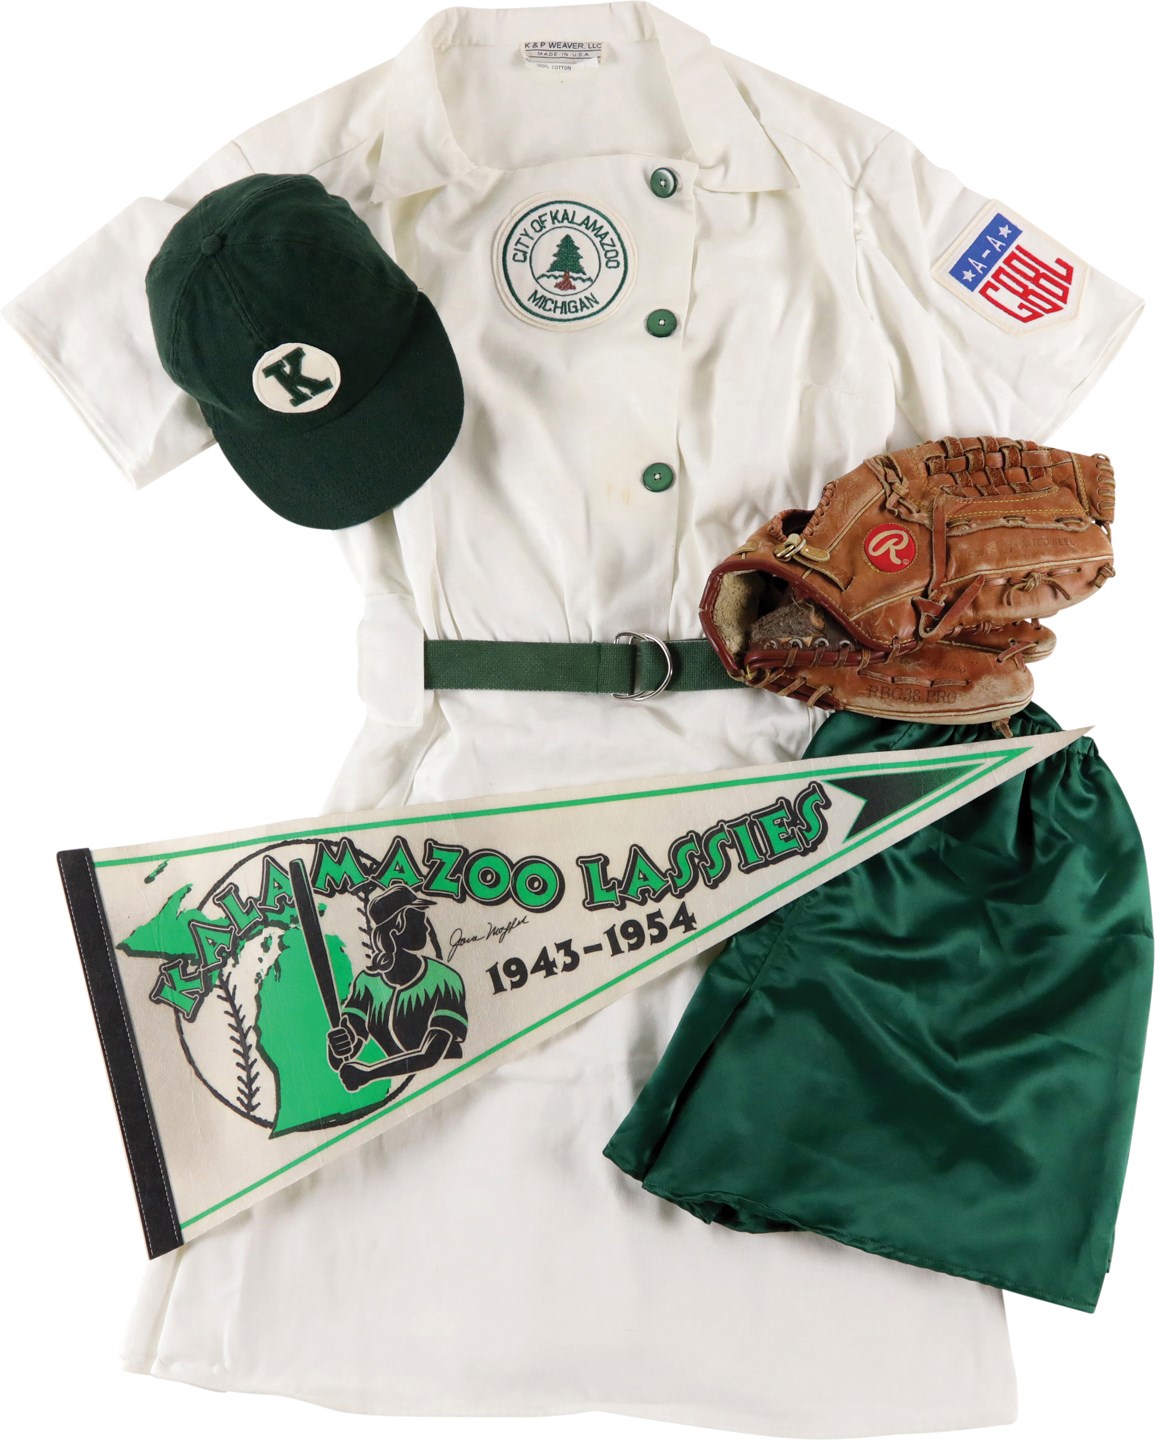 Baseball Equipment - 1951-52 Kalamazoo Lassies AAGPL Jane Moffet Replica Tour Uniform Plus Related Material